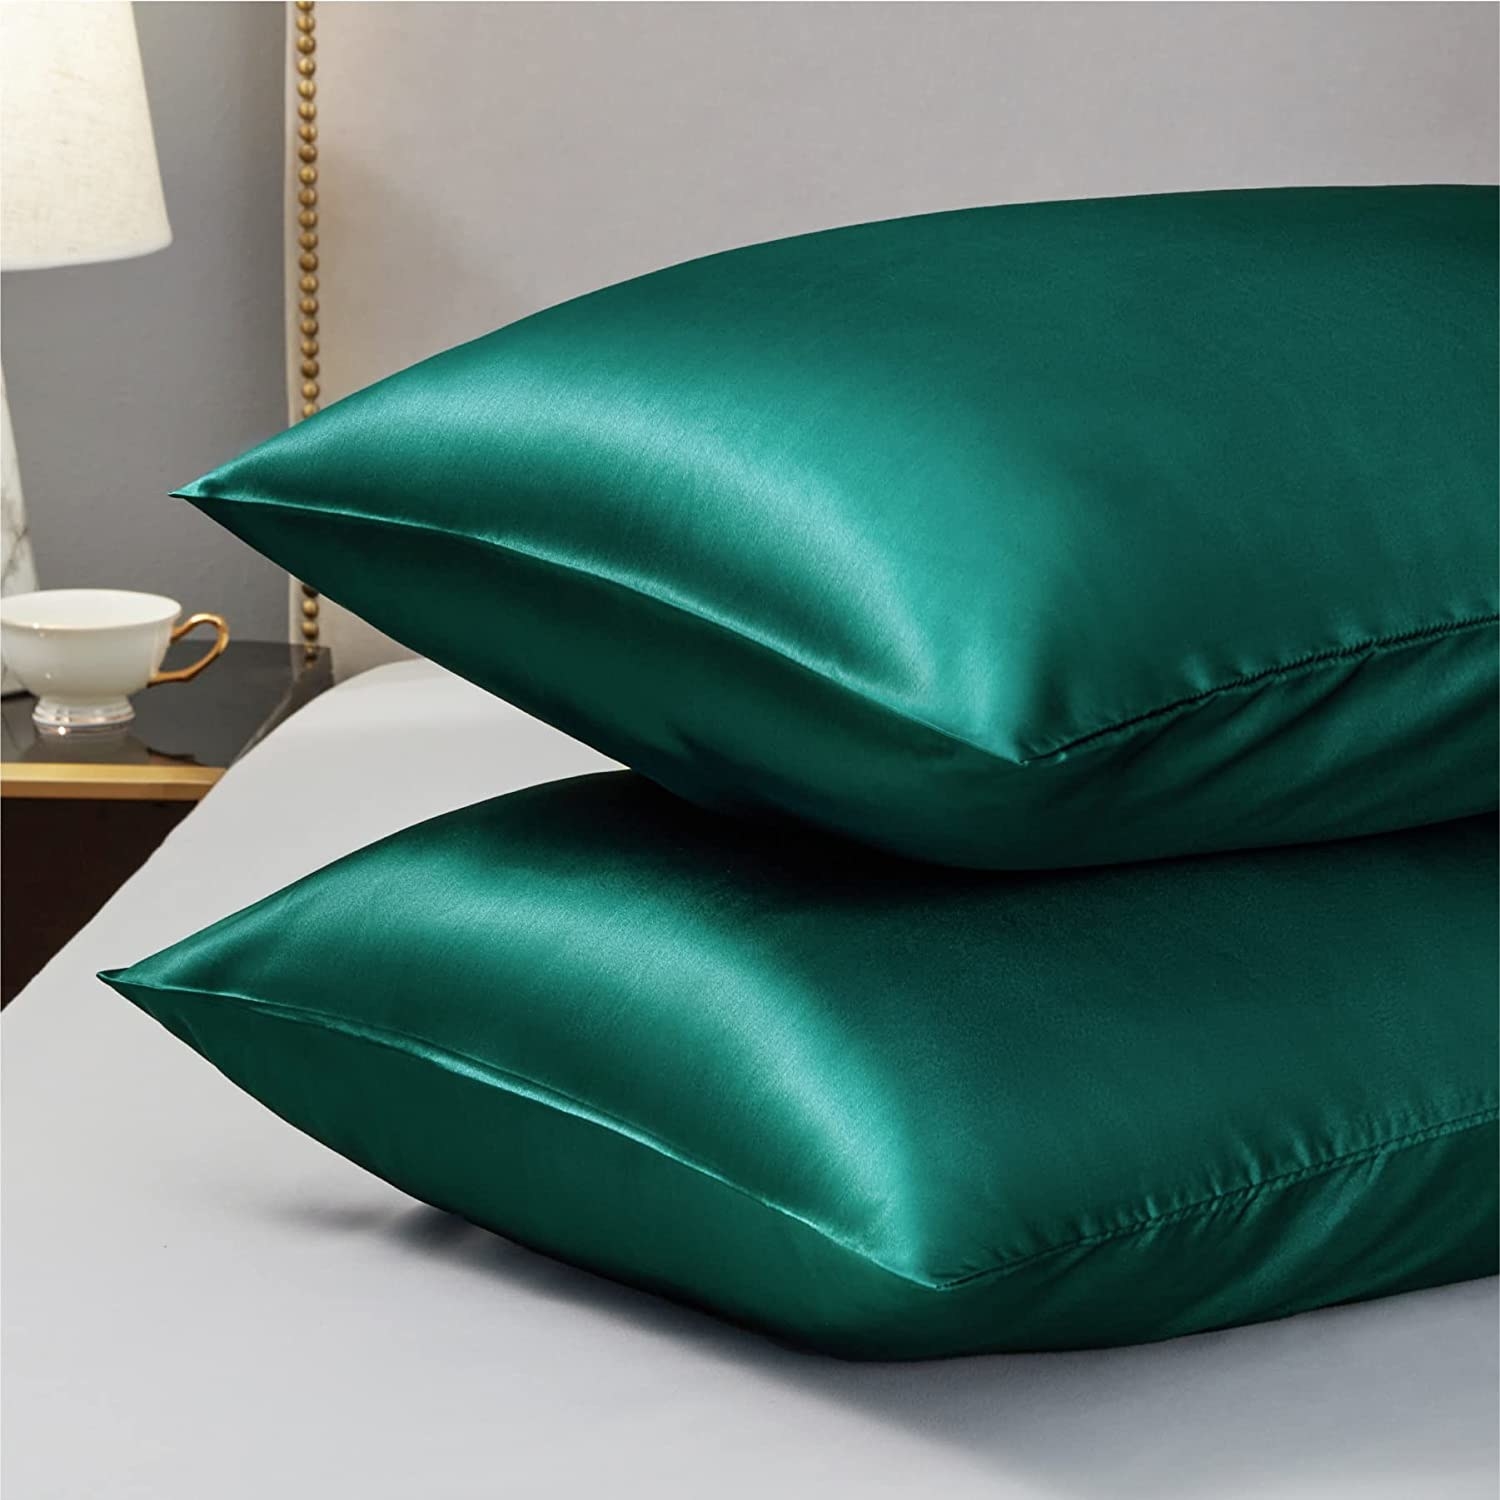 A pair of emerald green pillowcases